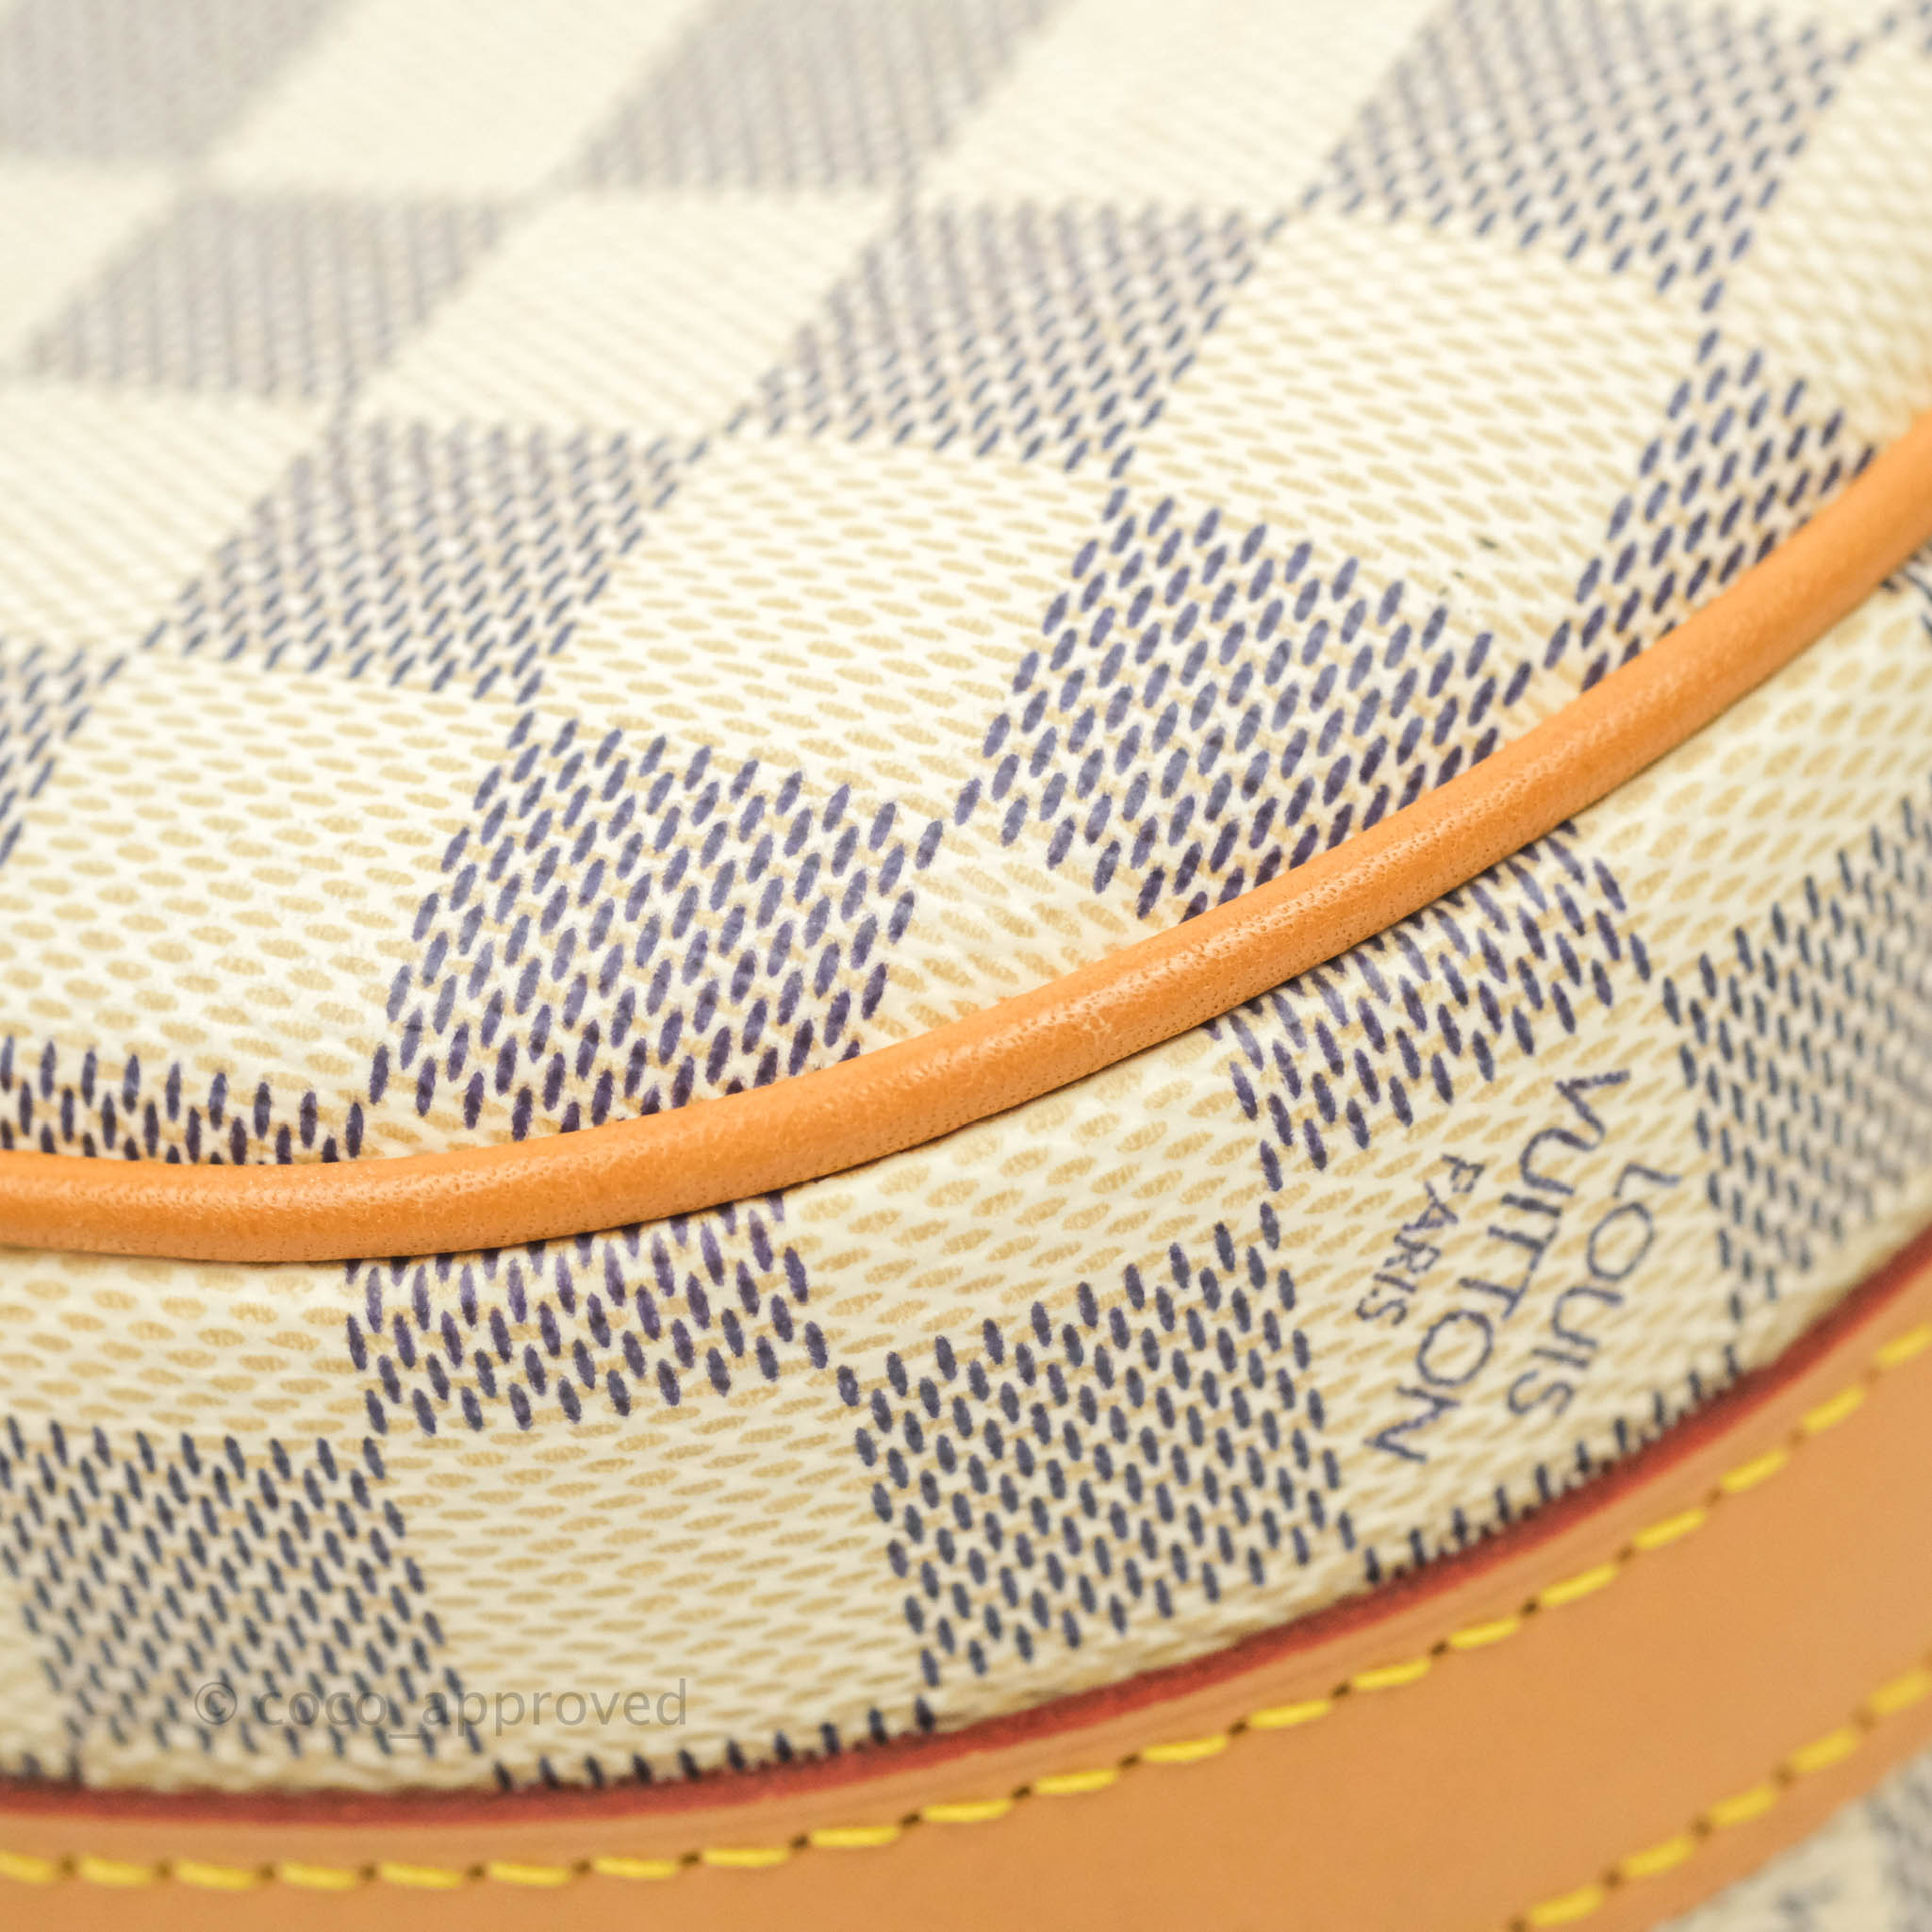 New Louis Vuitton BOITE CHAPEAU PM Damier Check White/Cream